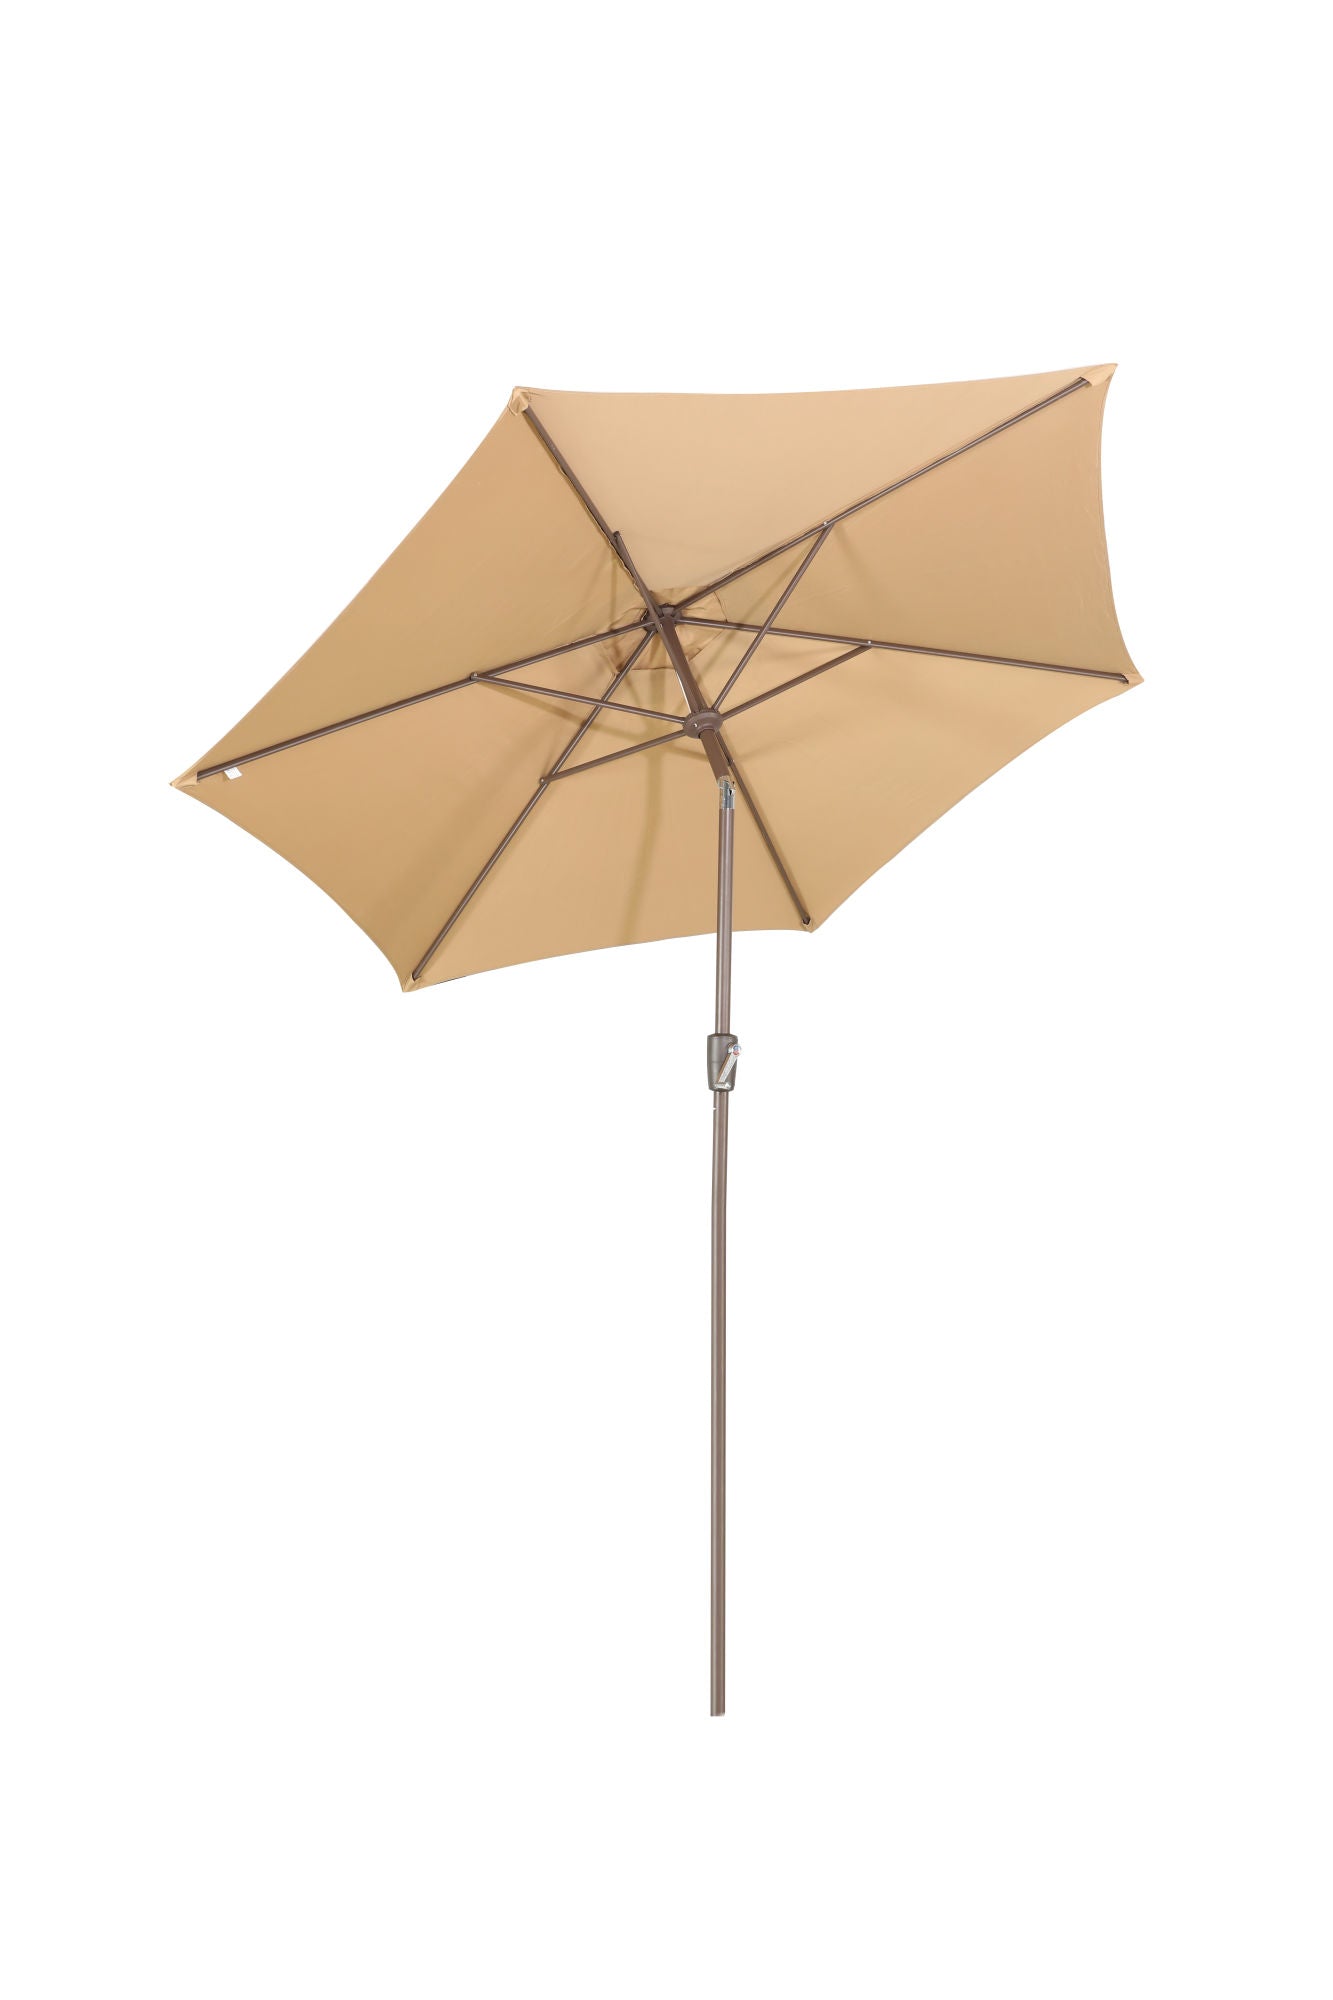 9 Feet Patio Umbrella